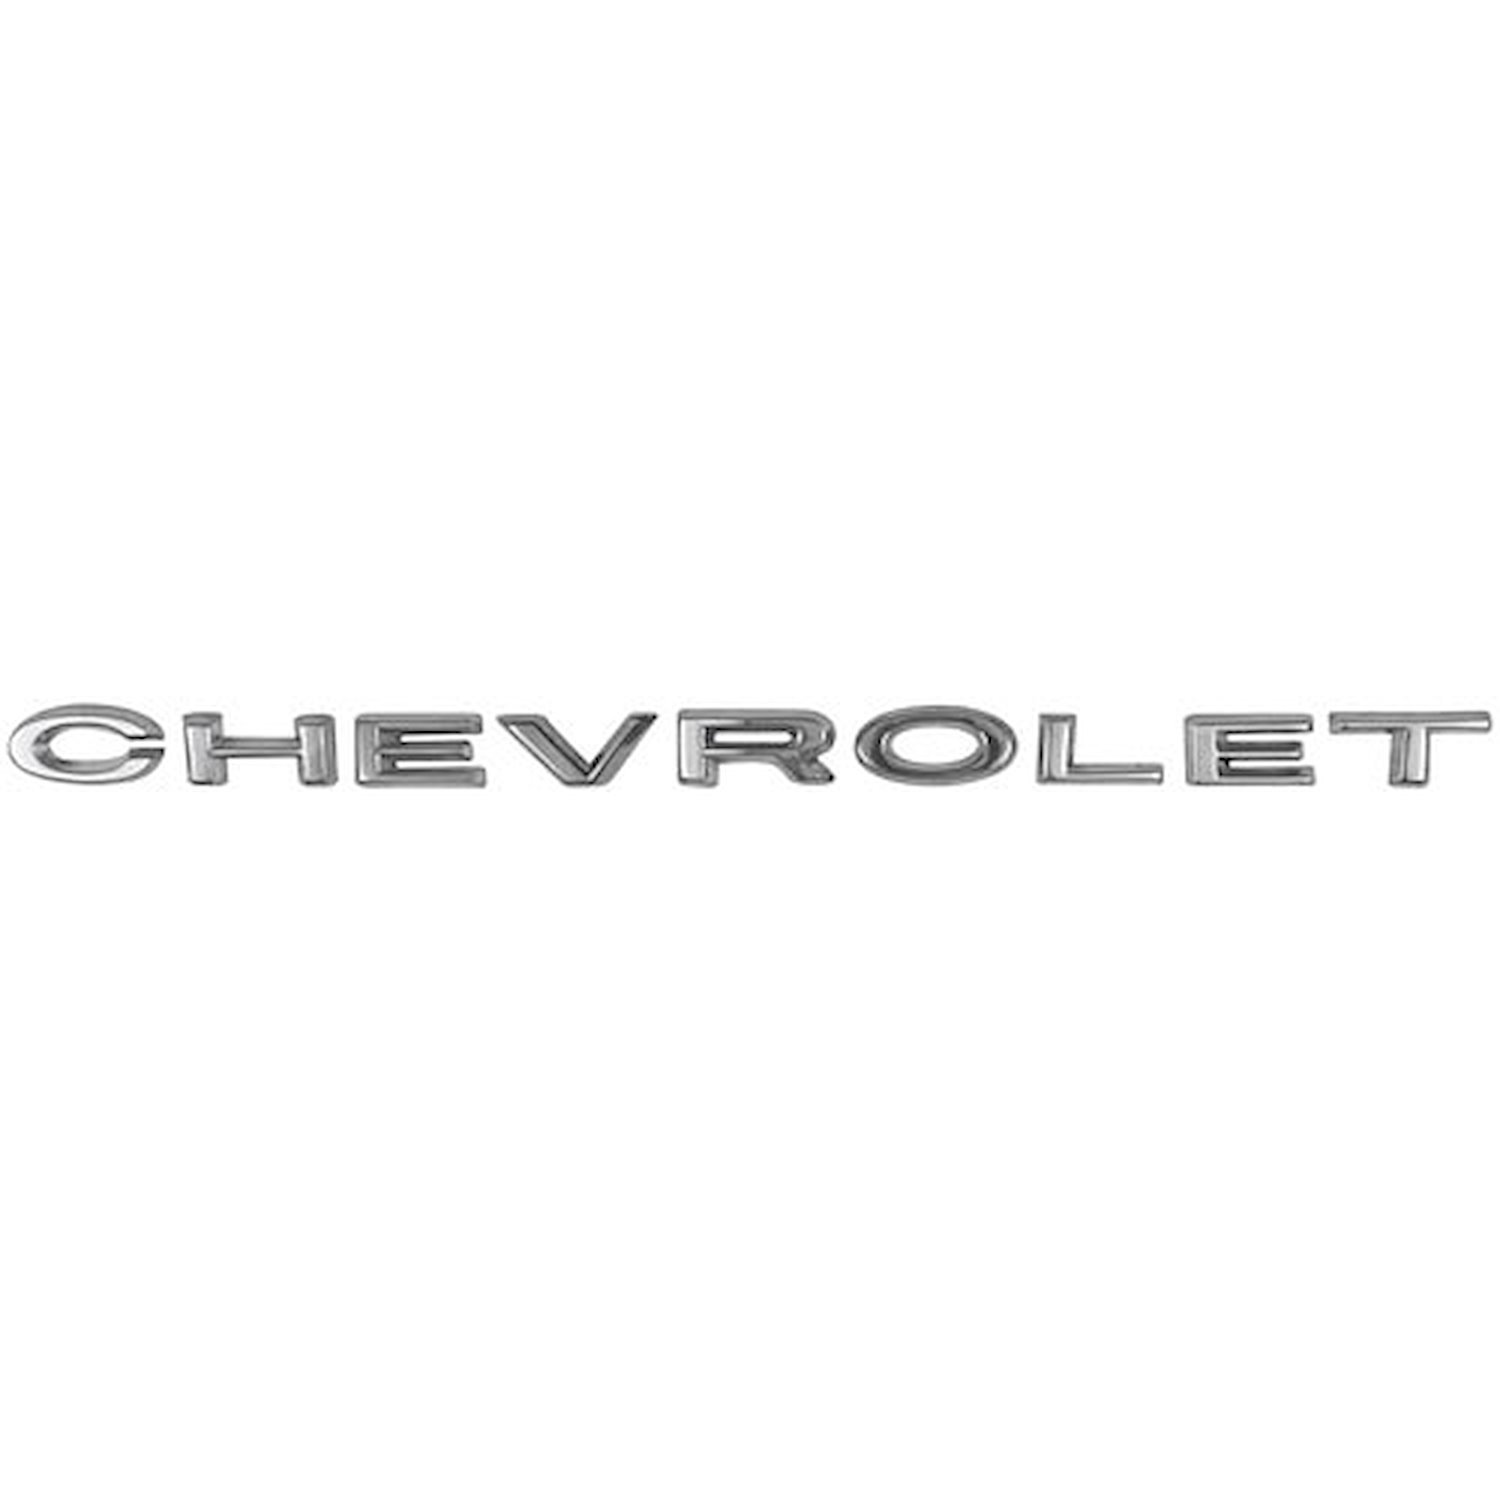 Hood Emblem Letters 1964 Chevy Chevelle & El Camino